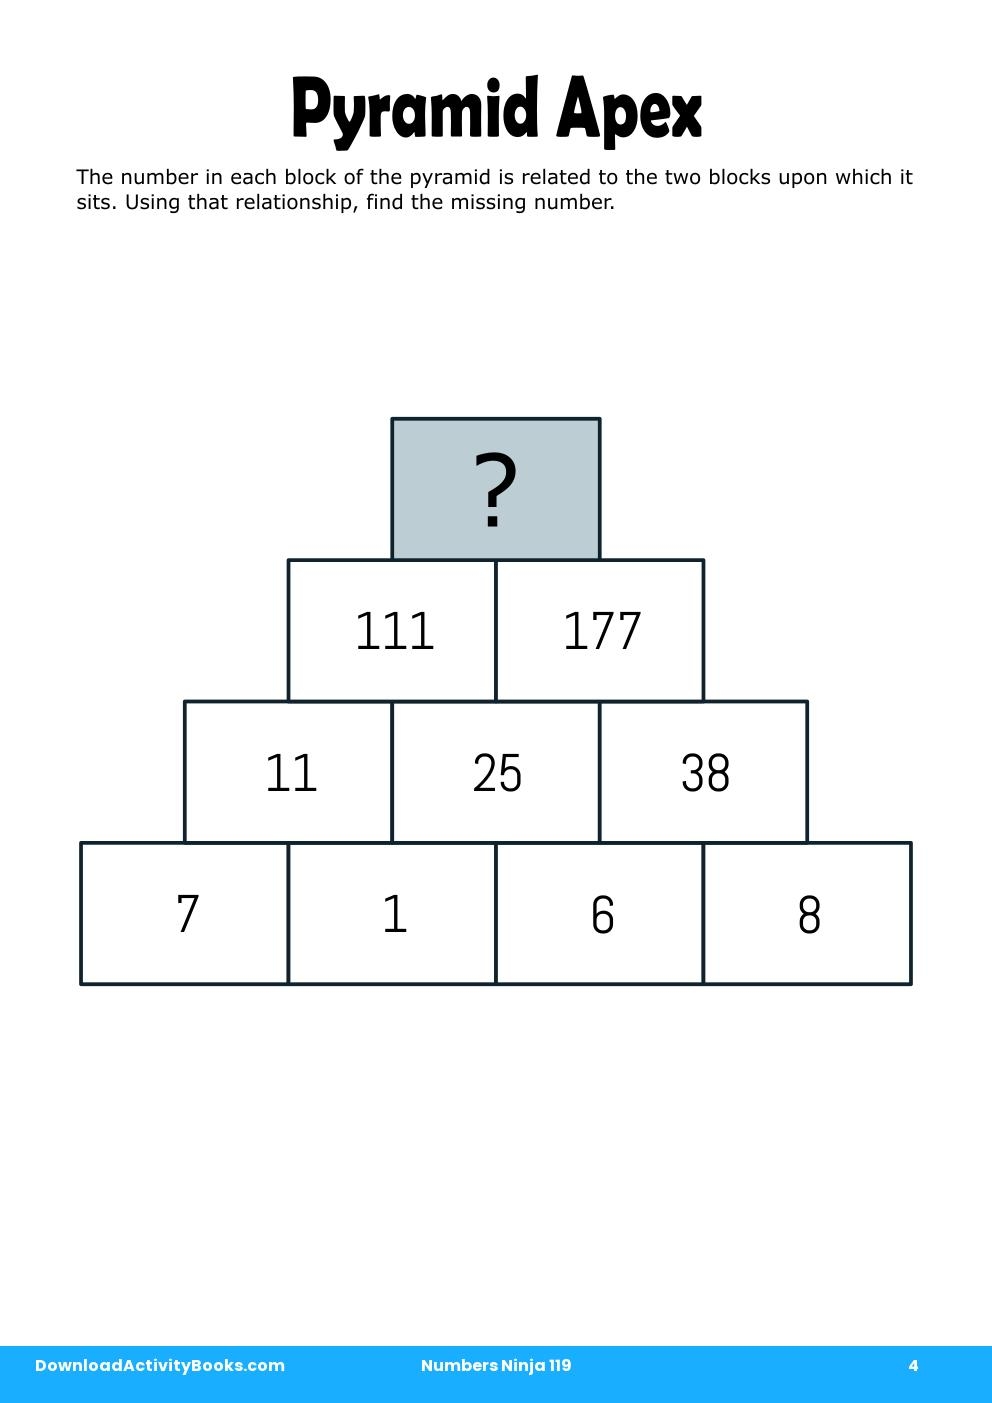 Pyramid Apex in Numbers Ninja 119